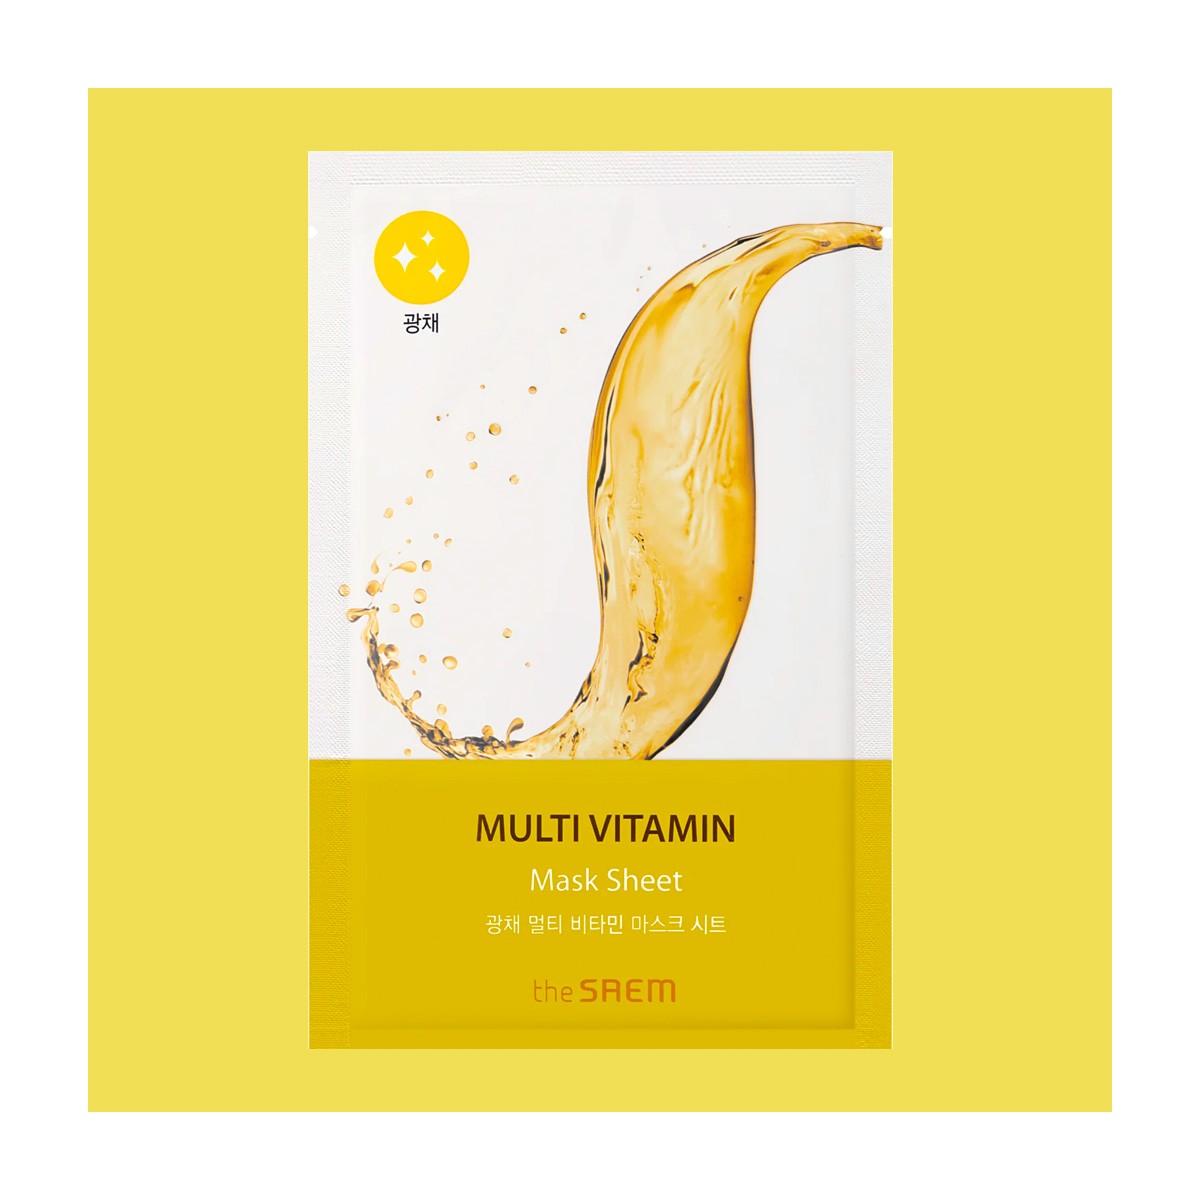 Mascarillas Coreanas de Hoja al mejor precio: Mascarilla con Vitaminas The SAEM Multi Vitamin Mask Sheet de The Saem en Skin Thinks - Piel Seca